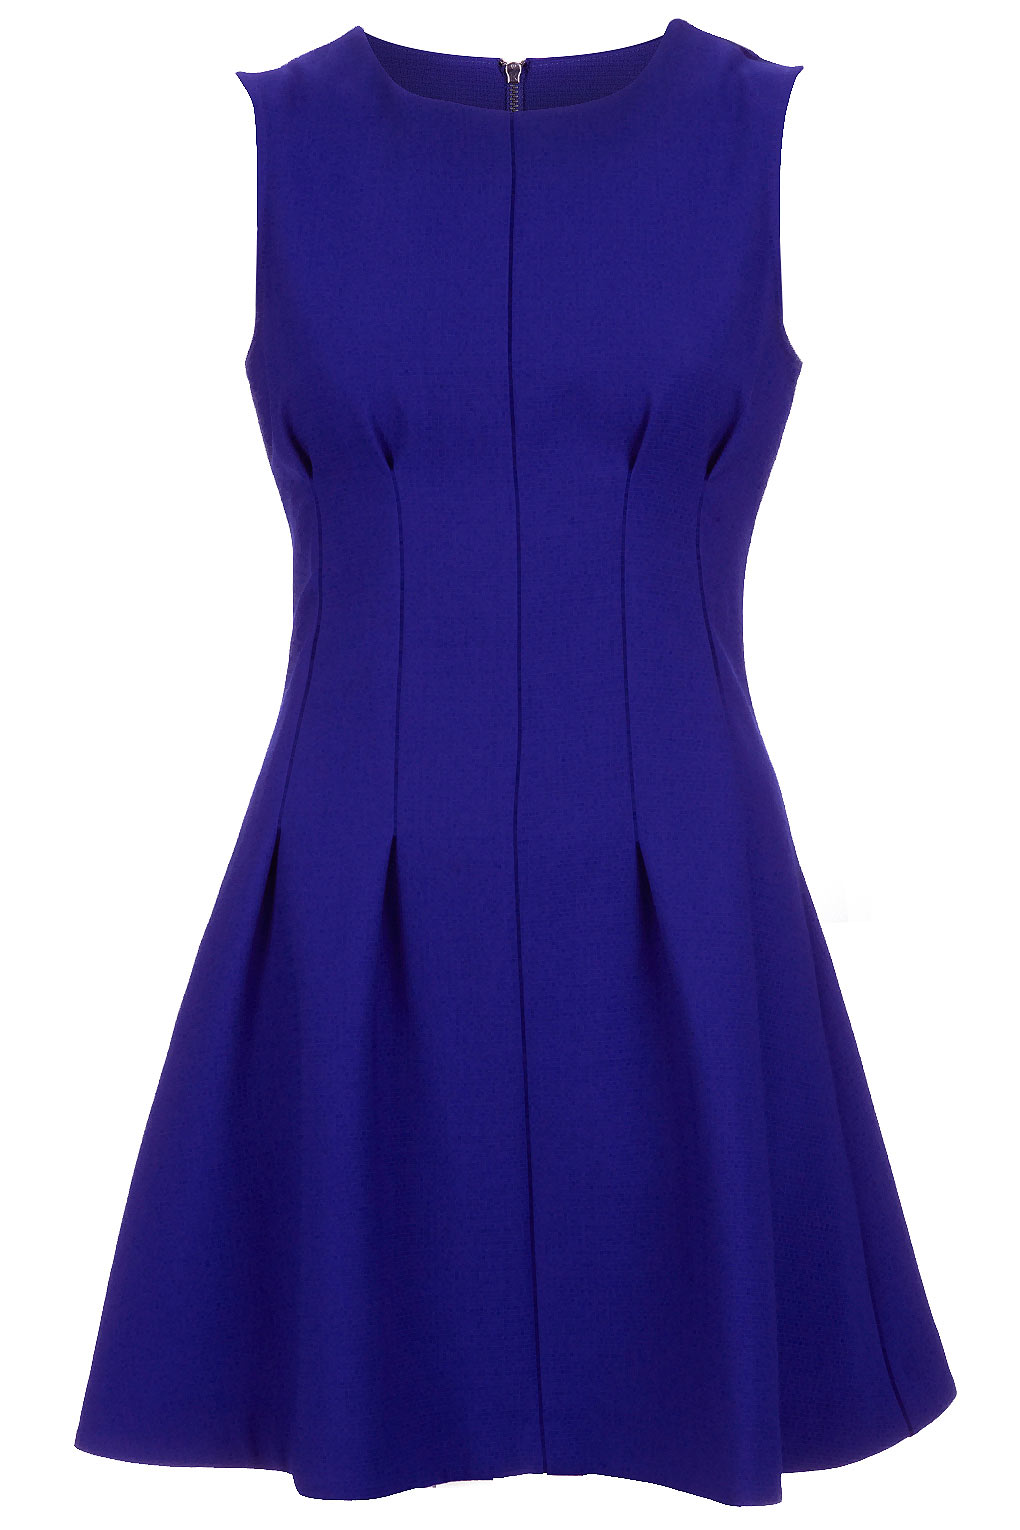 Lyst - Topshop Seam Waist Shift Dress in Blue